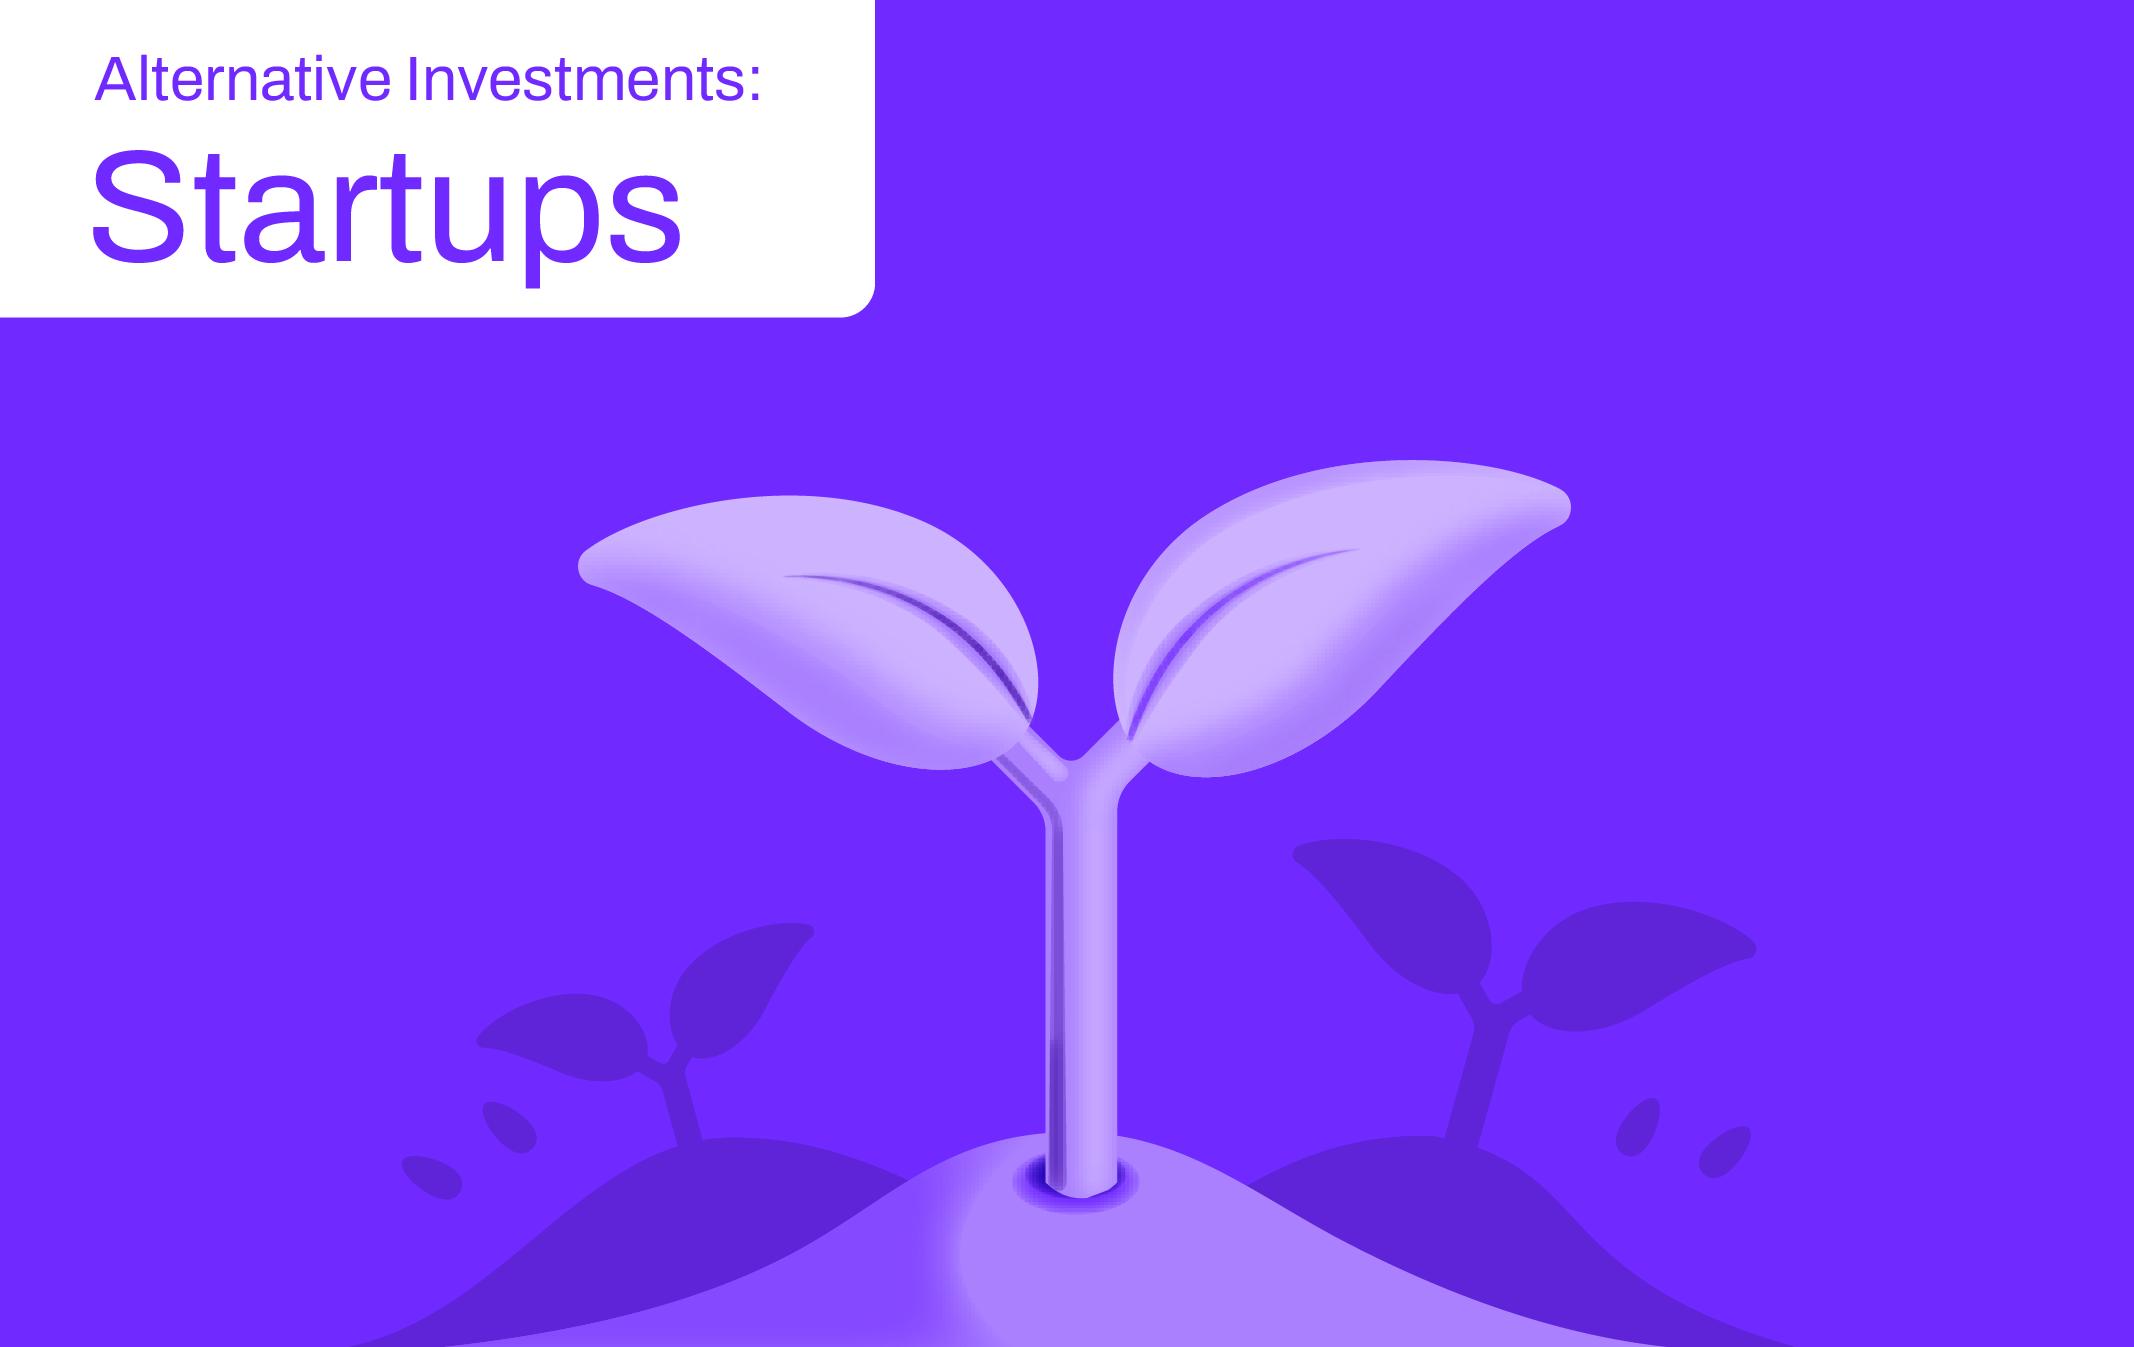 Alternative Investments: Startup Investing